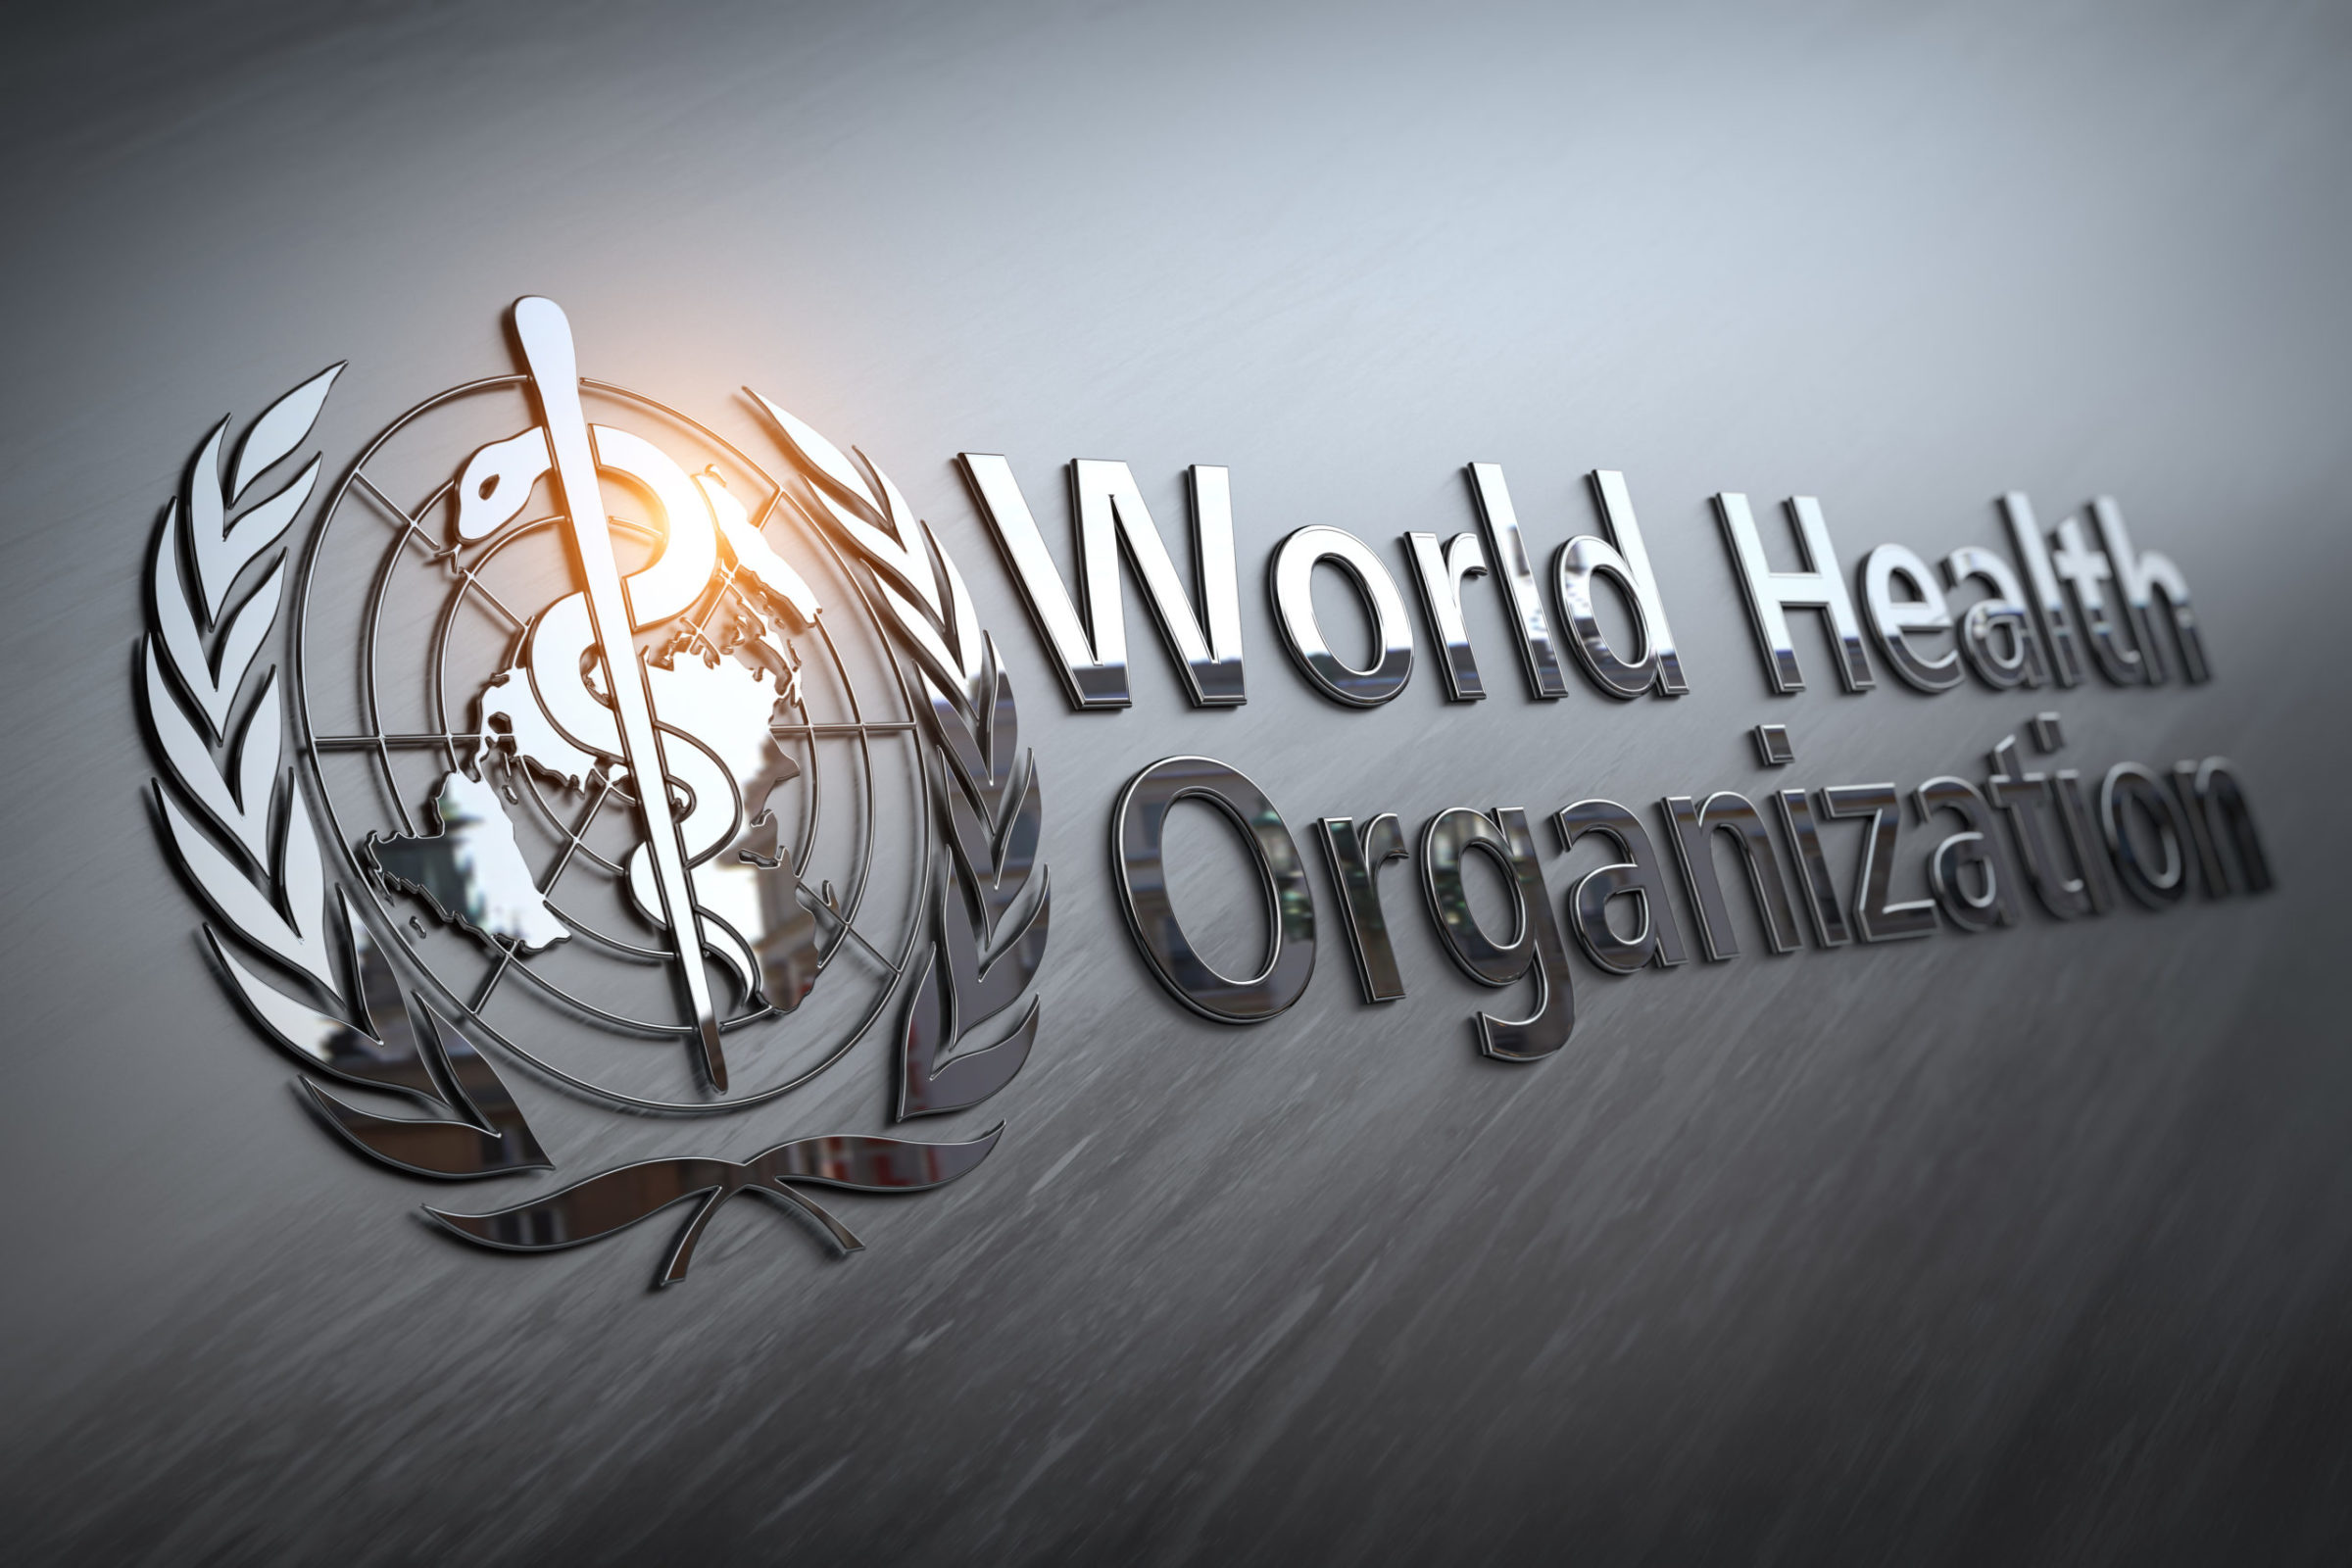 World Health Organization sign and symbol.